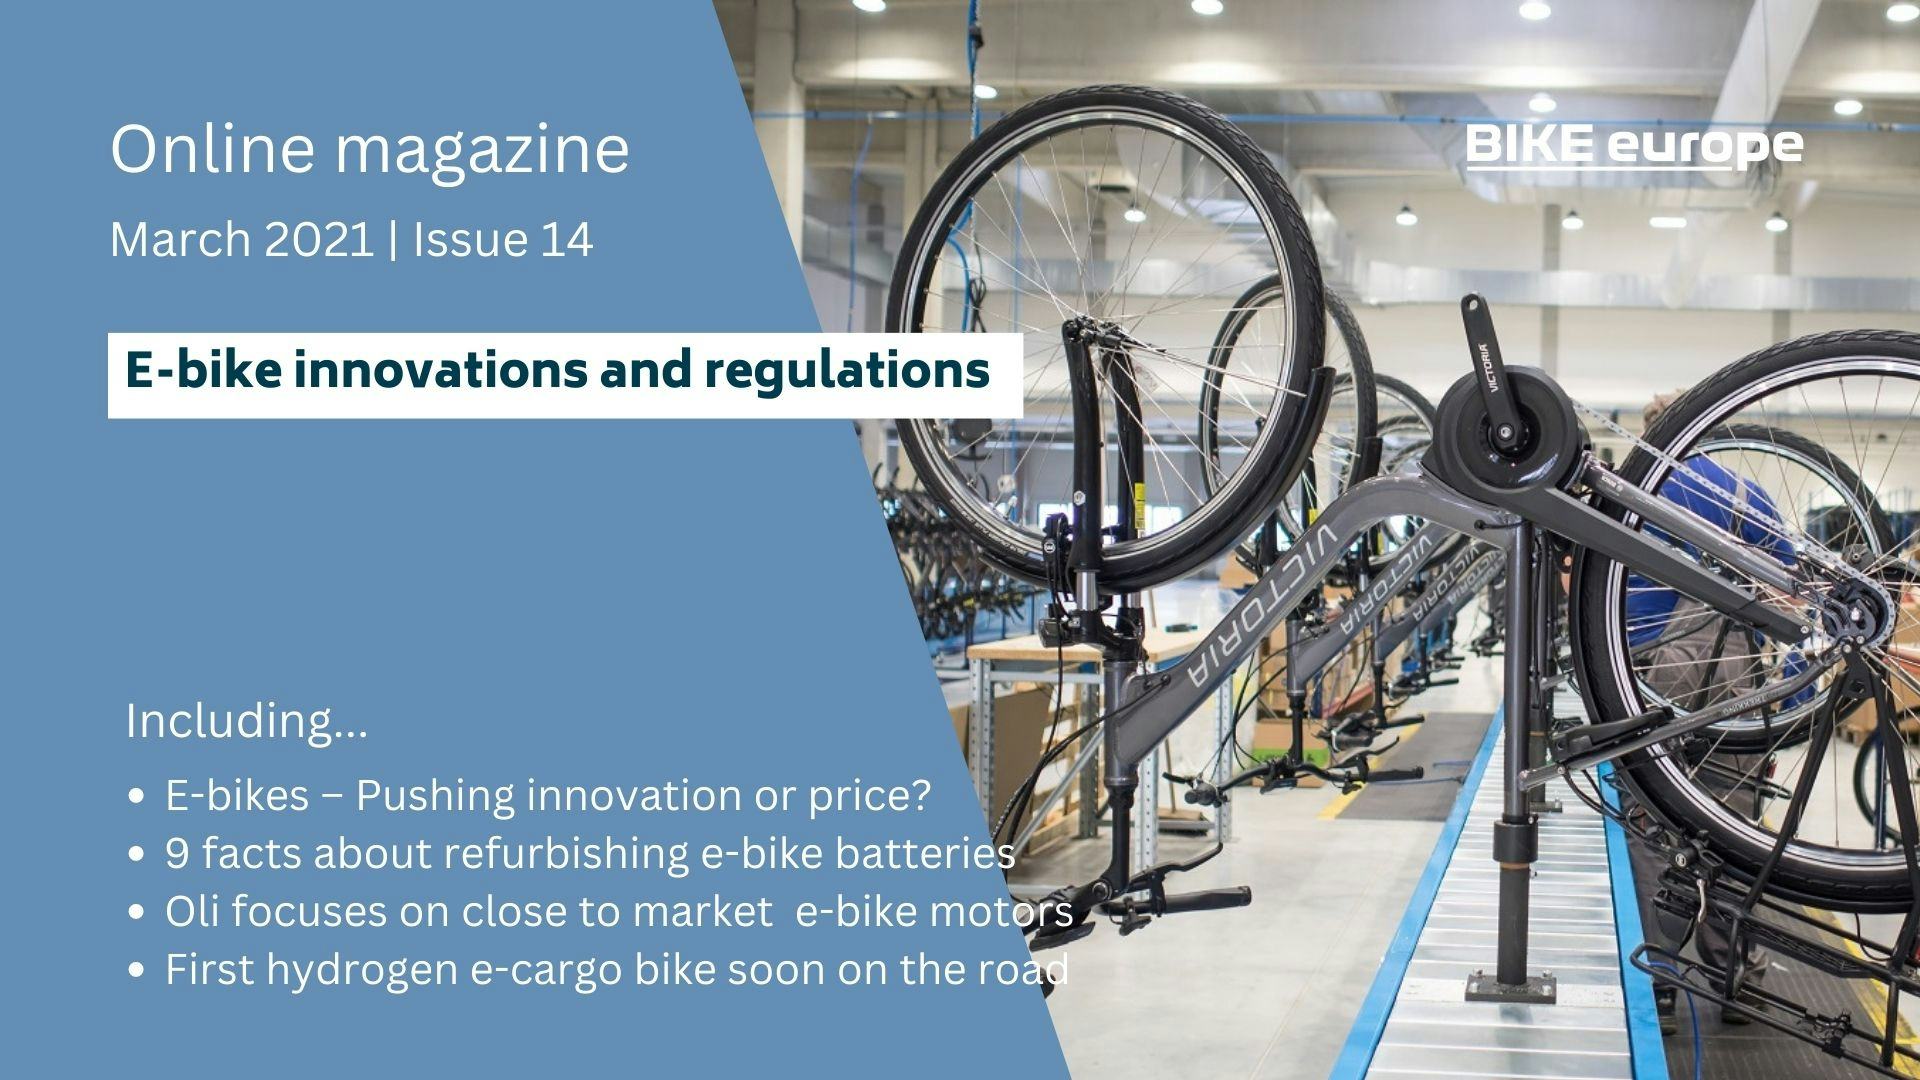 Online magazine: E-bike innovations and regulations